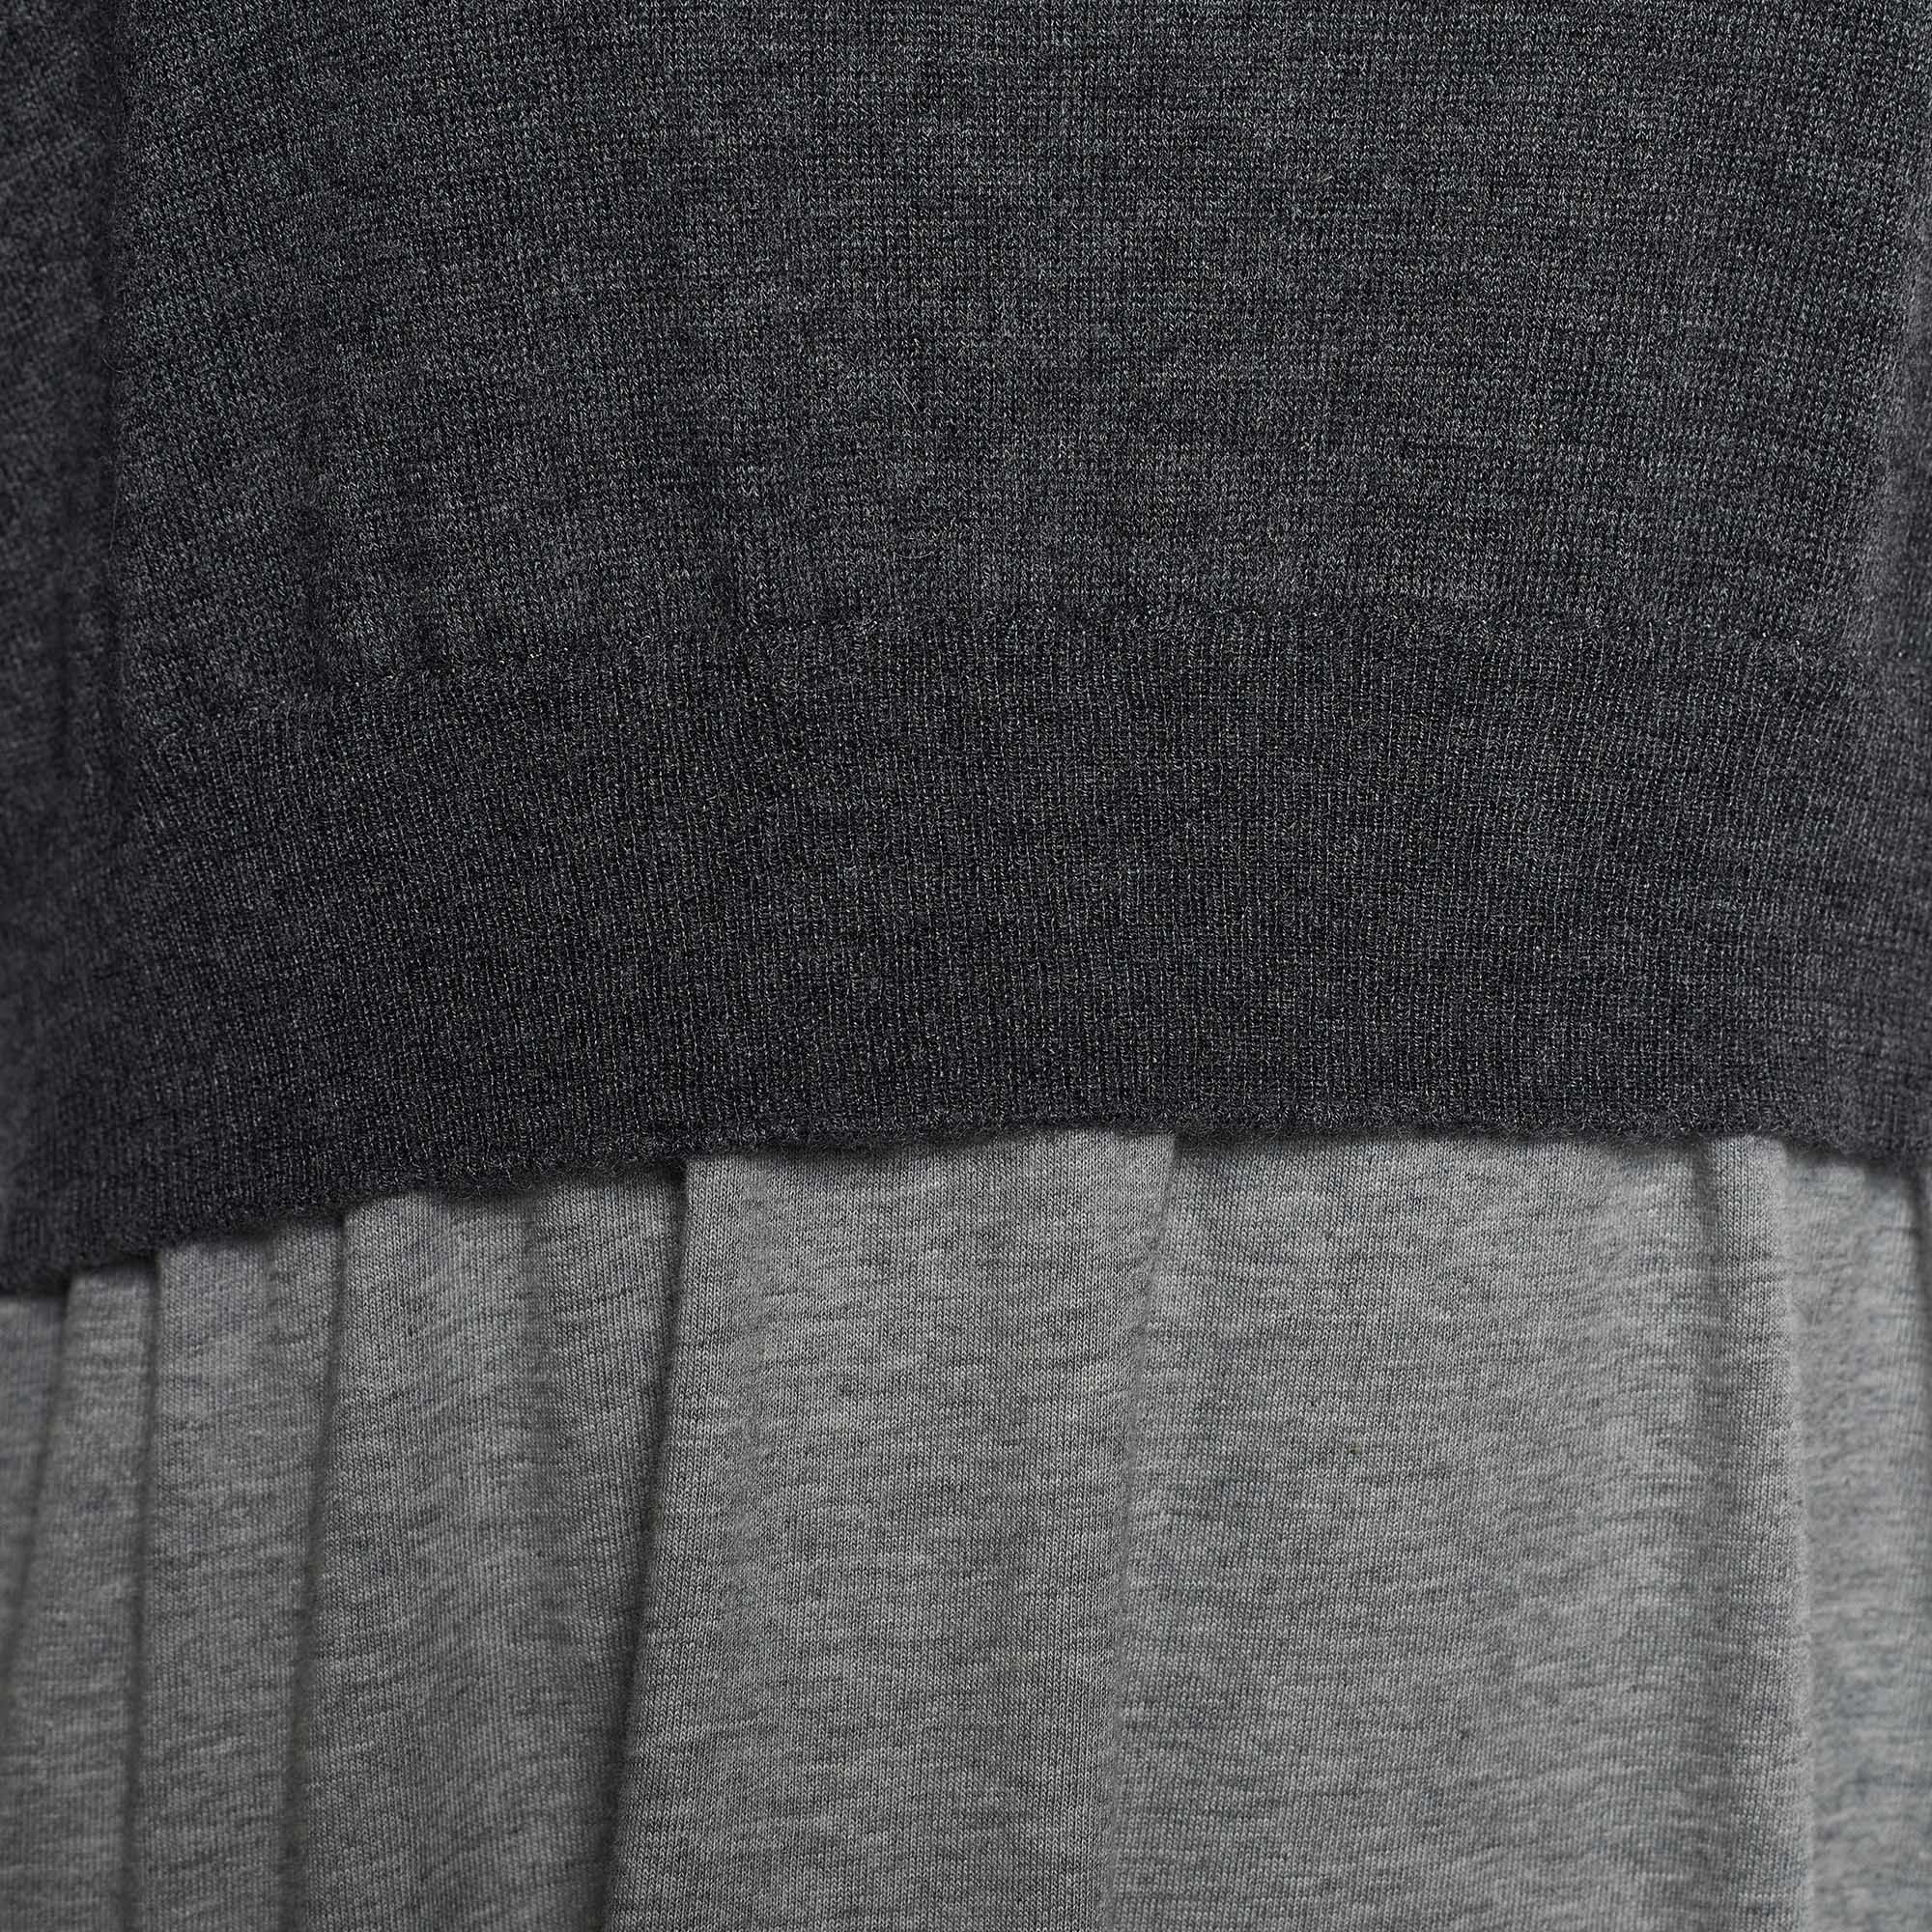 Marni Grey Colorblock Cashmere Overlay Knit Dress L